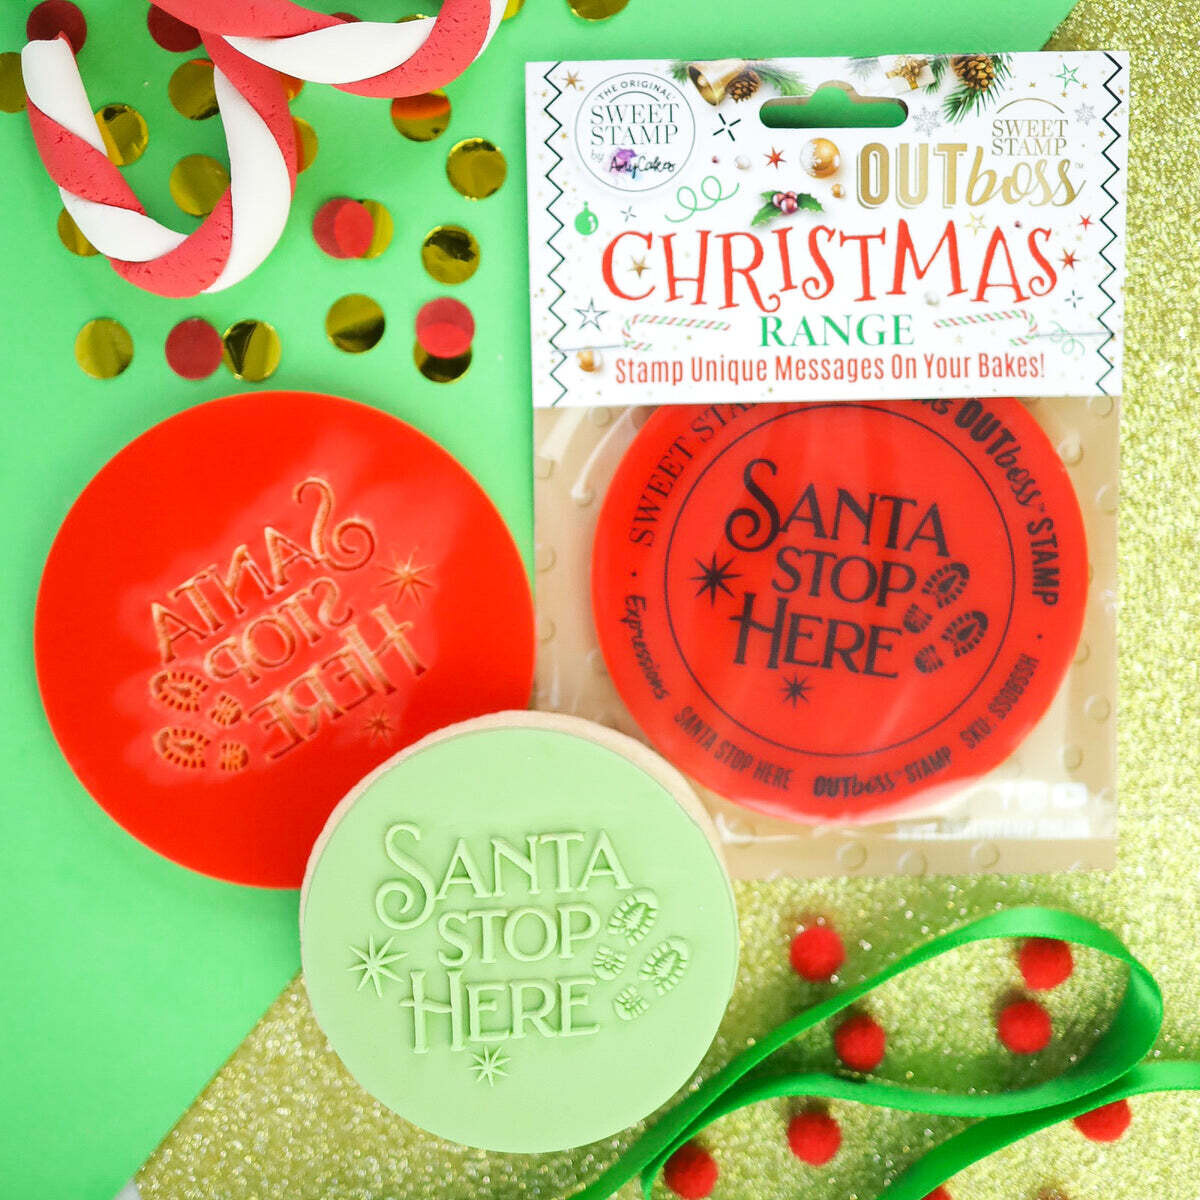 Sweet Stamp -OUTboss Christmas -SANTA STOP HERE -Χριστουγεννιάτικη Σφραγίδα